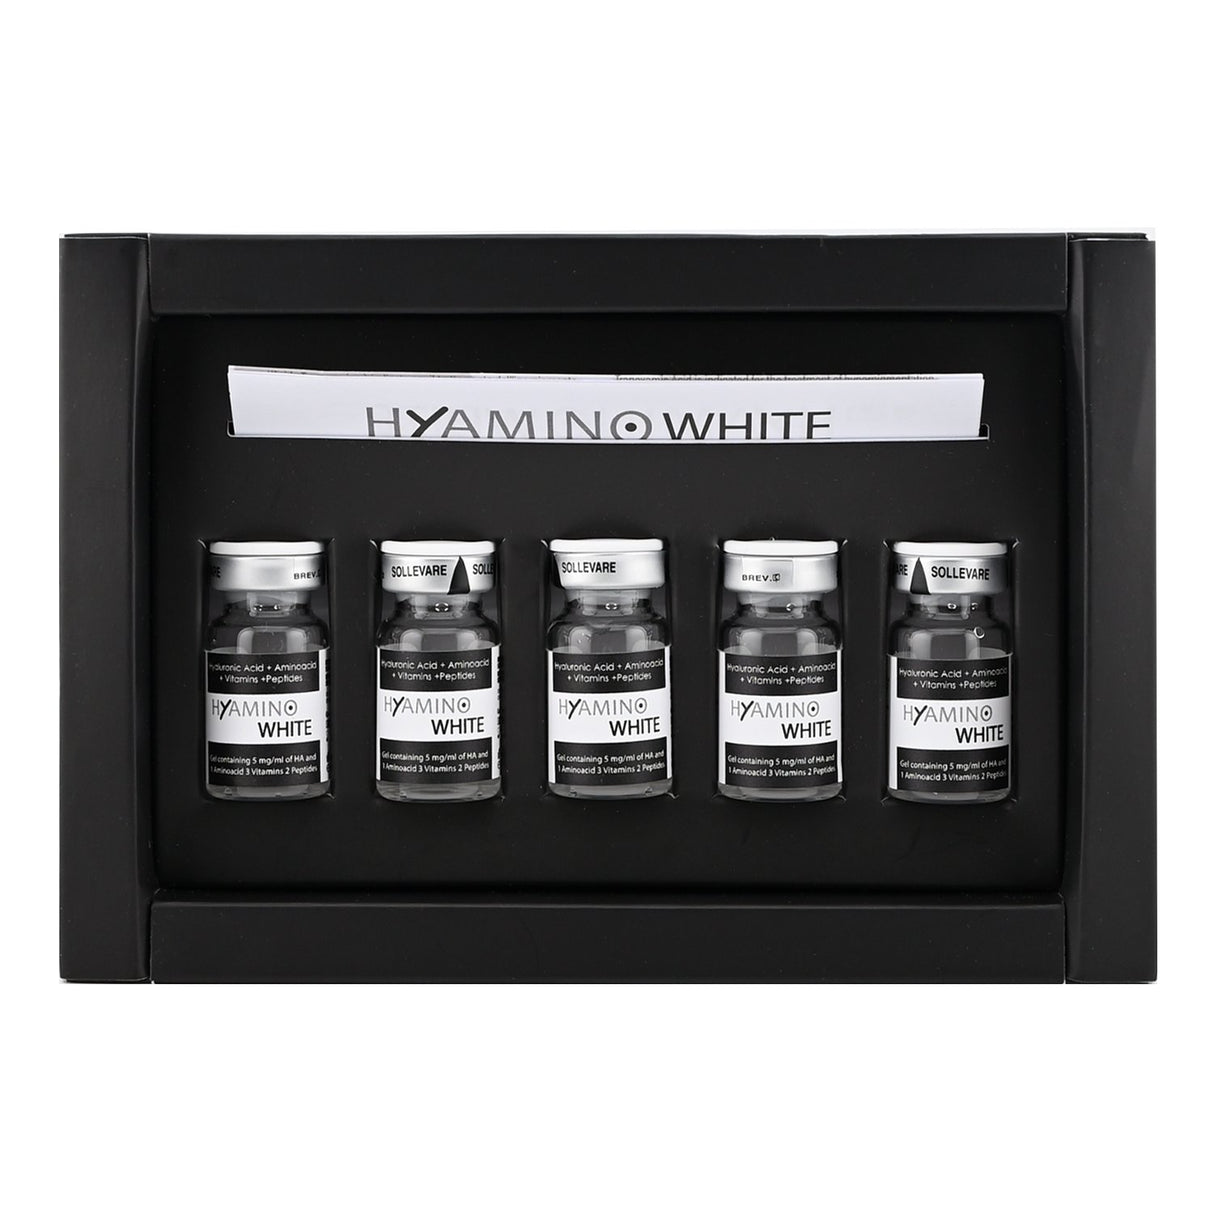 Hyamino White - Filler Lux™ - MESOTHERAPY - Medixa